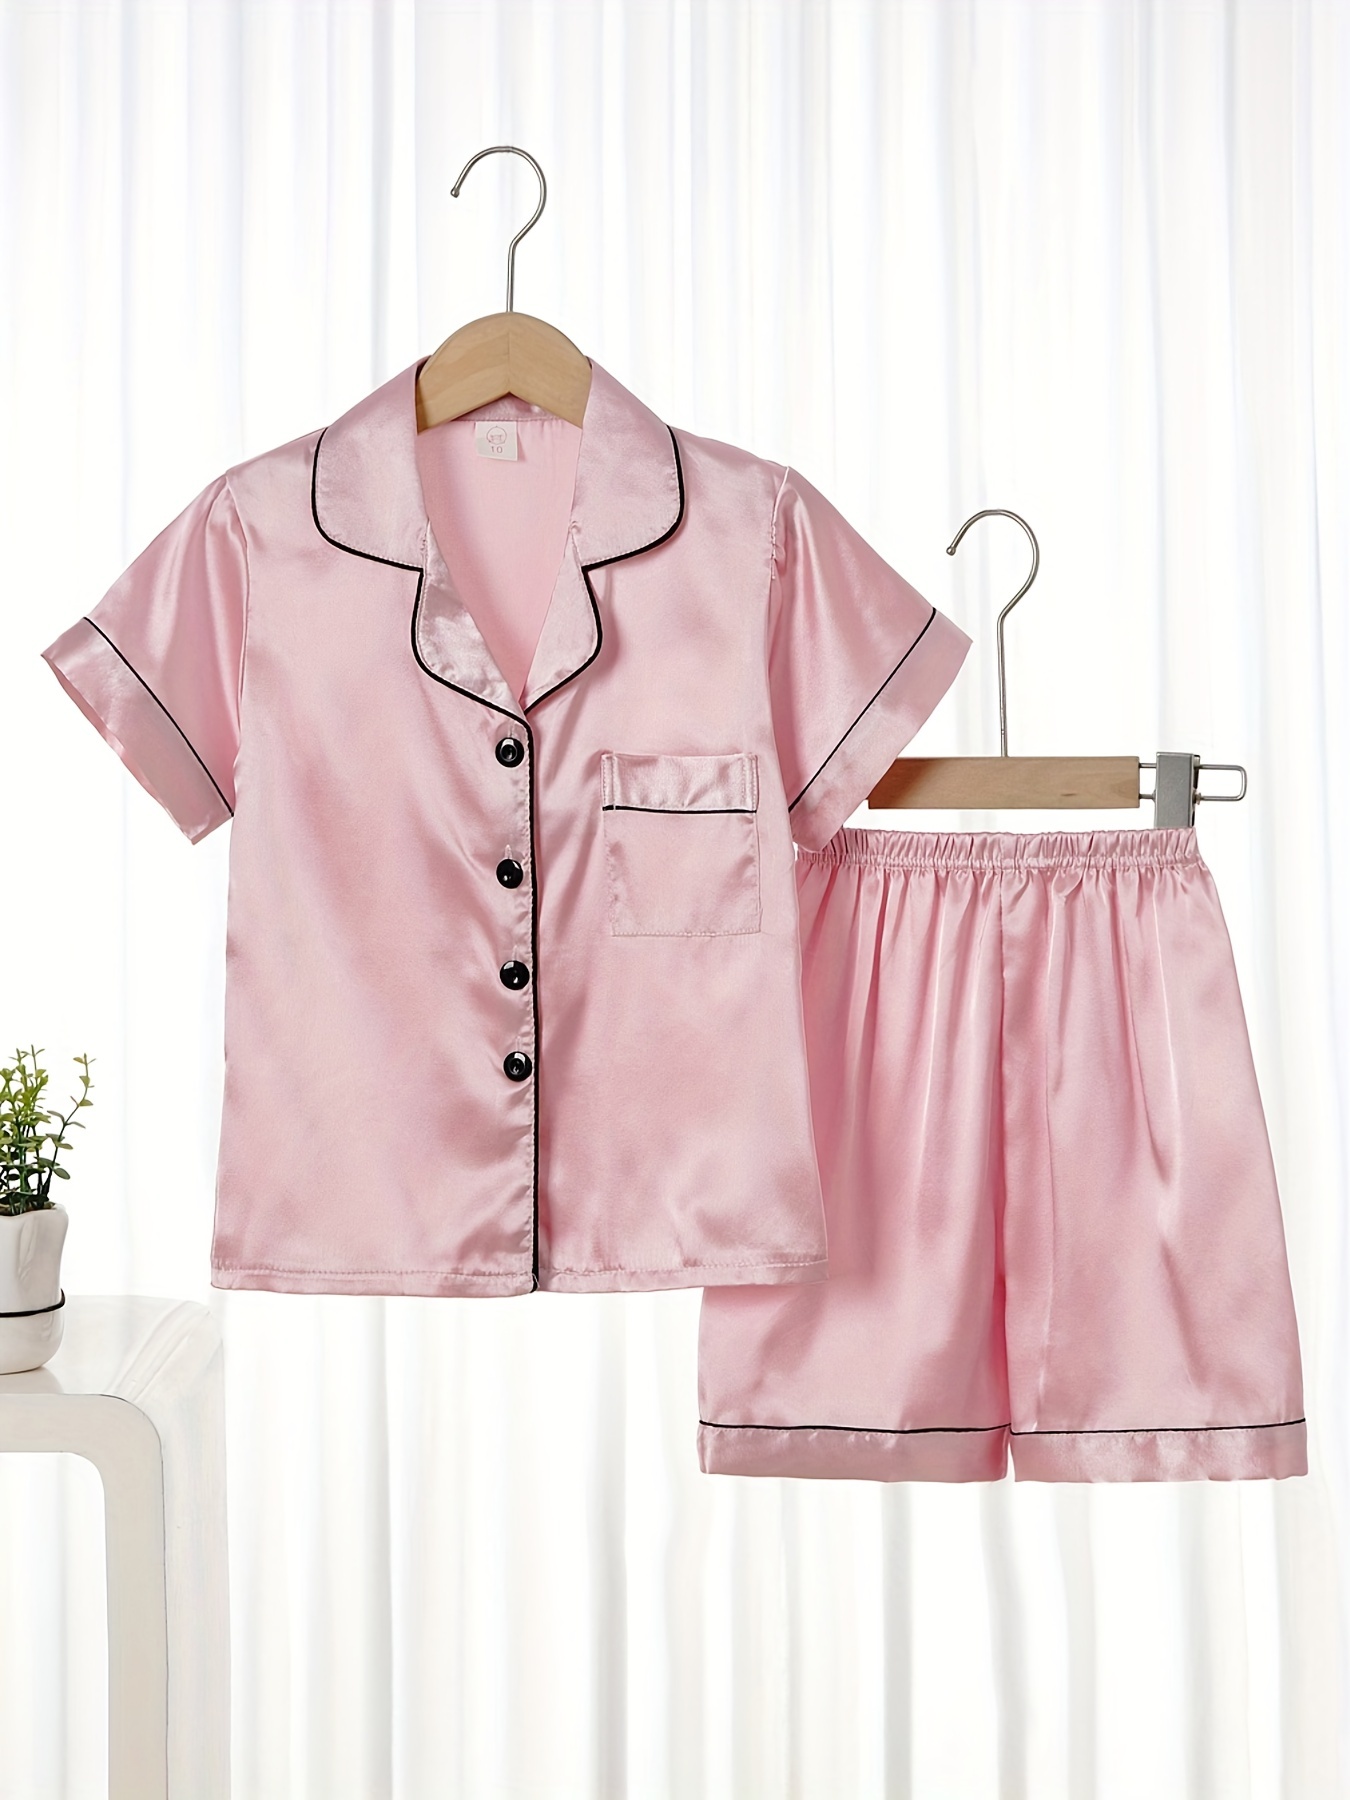 Happy Cherry Teen Girls Soft Cotton Underwear Cute Patterns Comfort Briefs  Panties 10 Pack Fit 10-16 Years